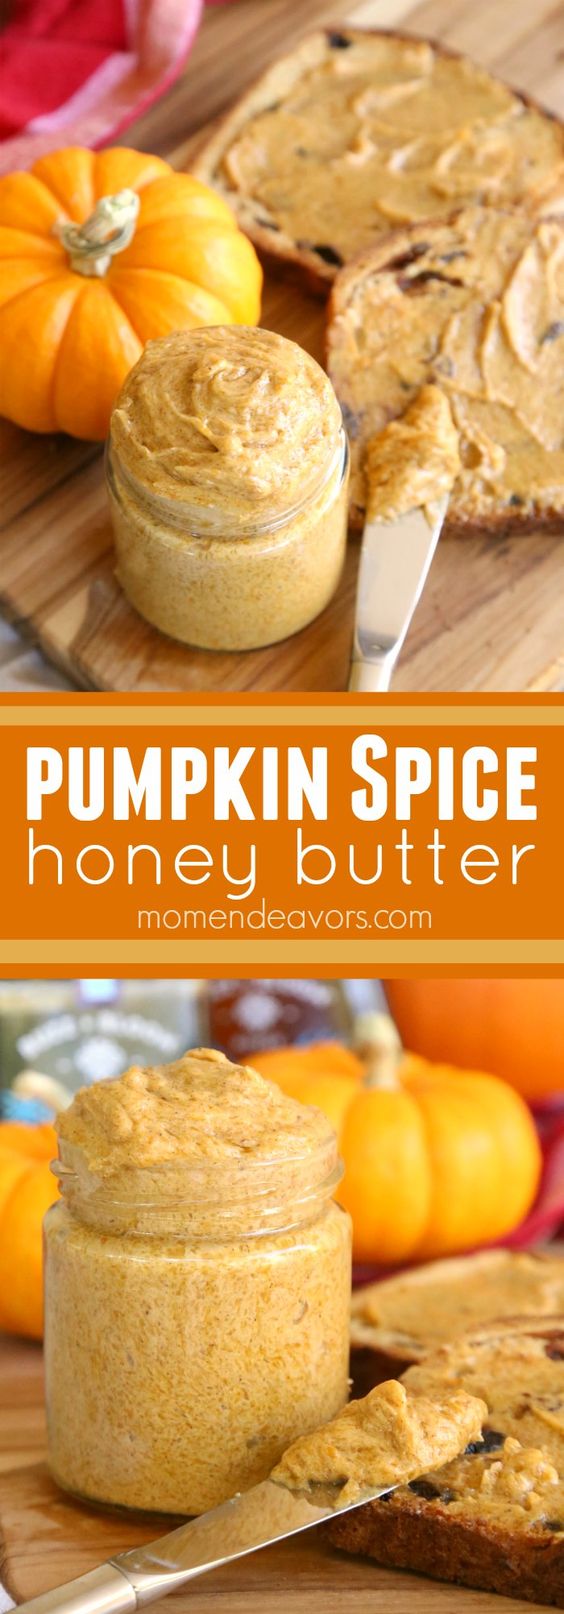 Pumpkin Spice Recipes: Pumpkin Spice Honey Butter Recipe